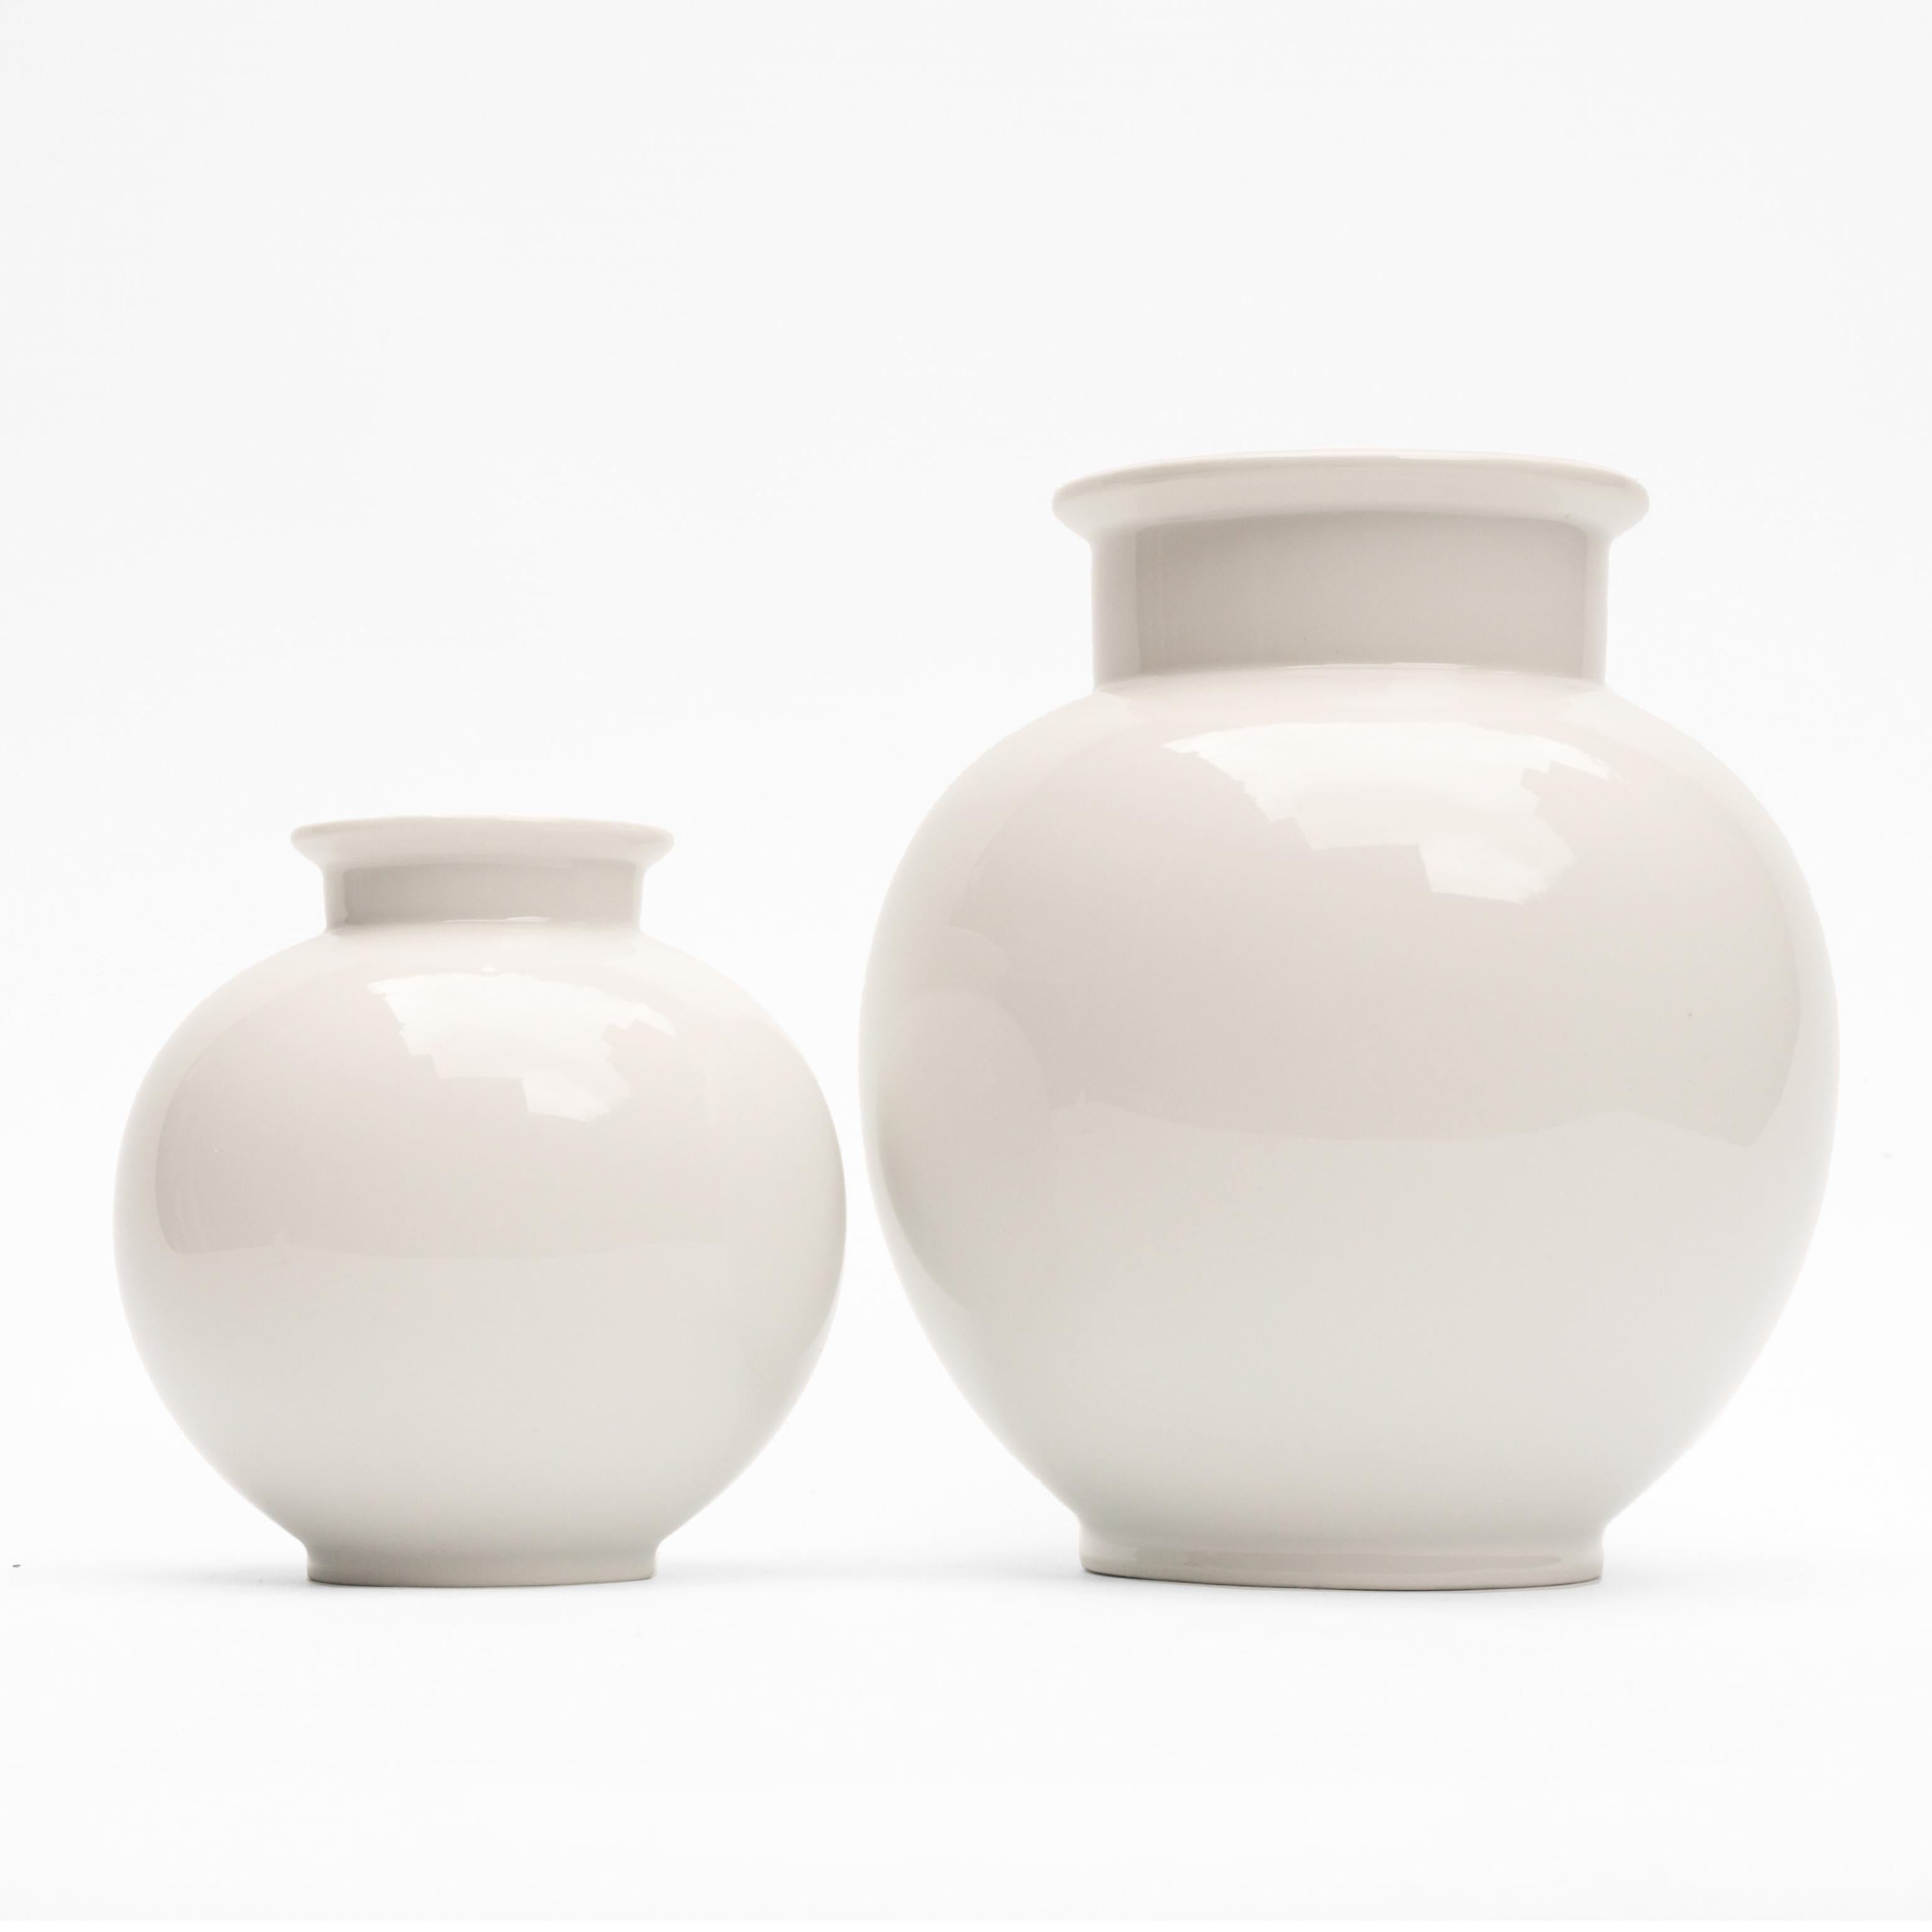 Pair of Porcelain Flower Vases by Thomas 9